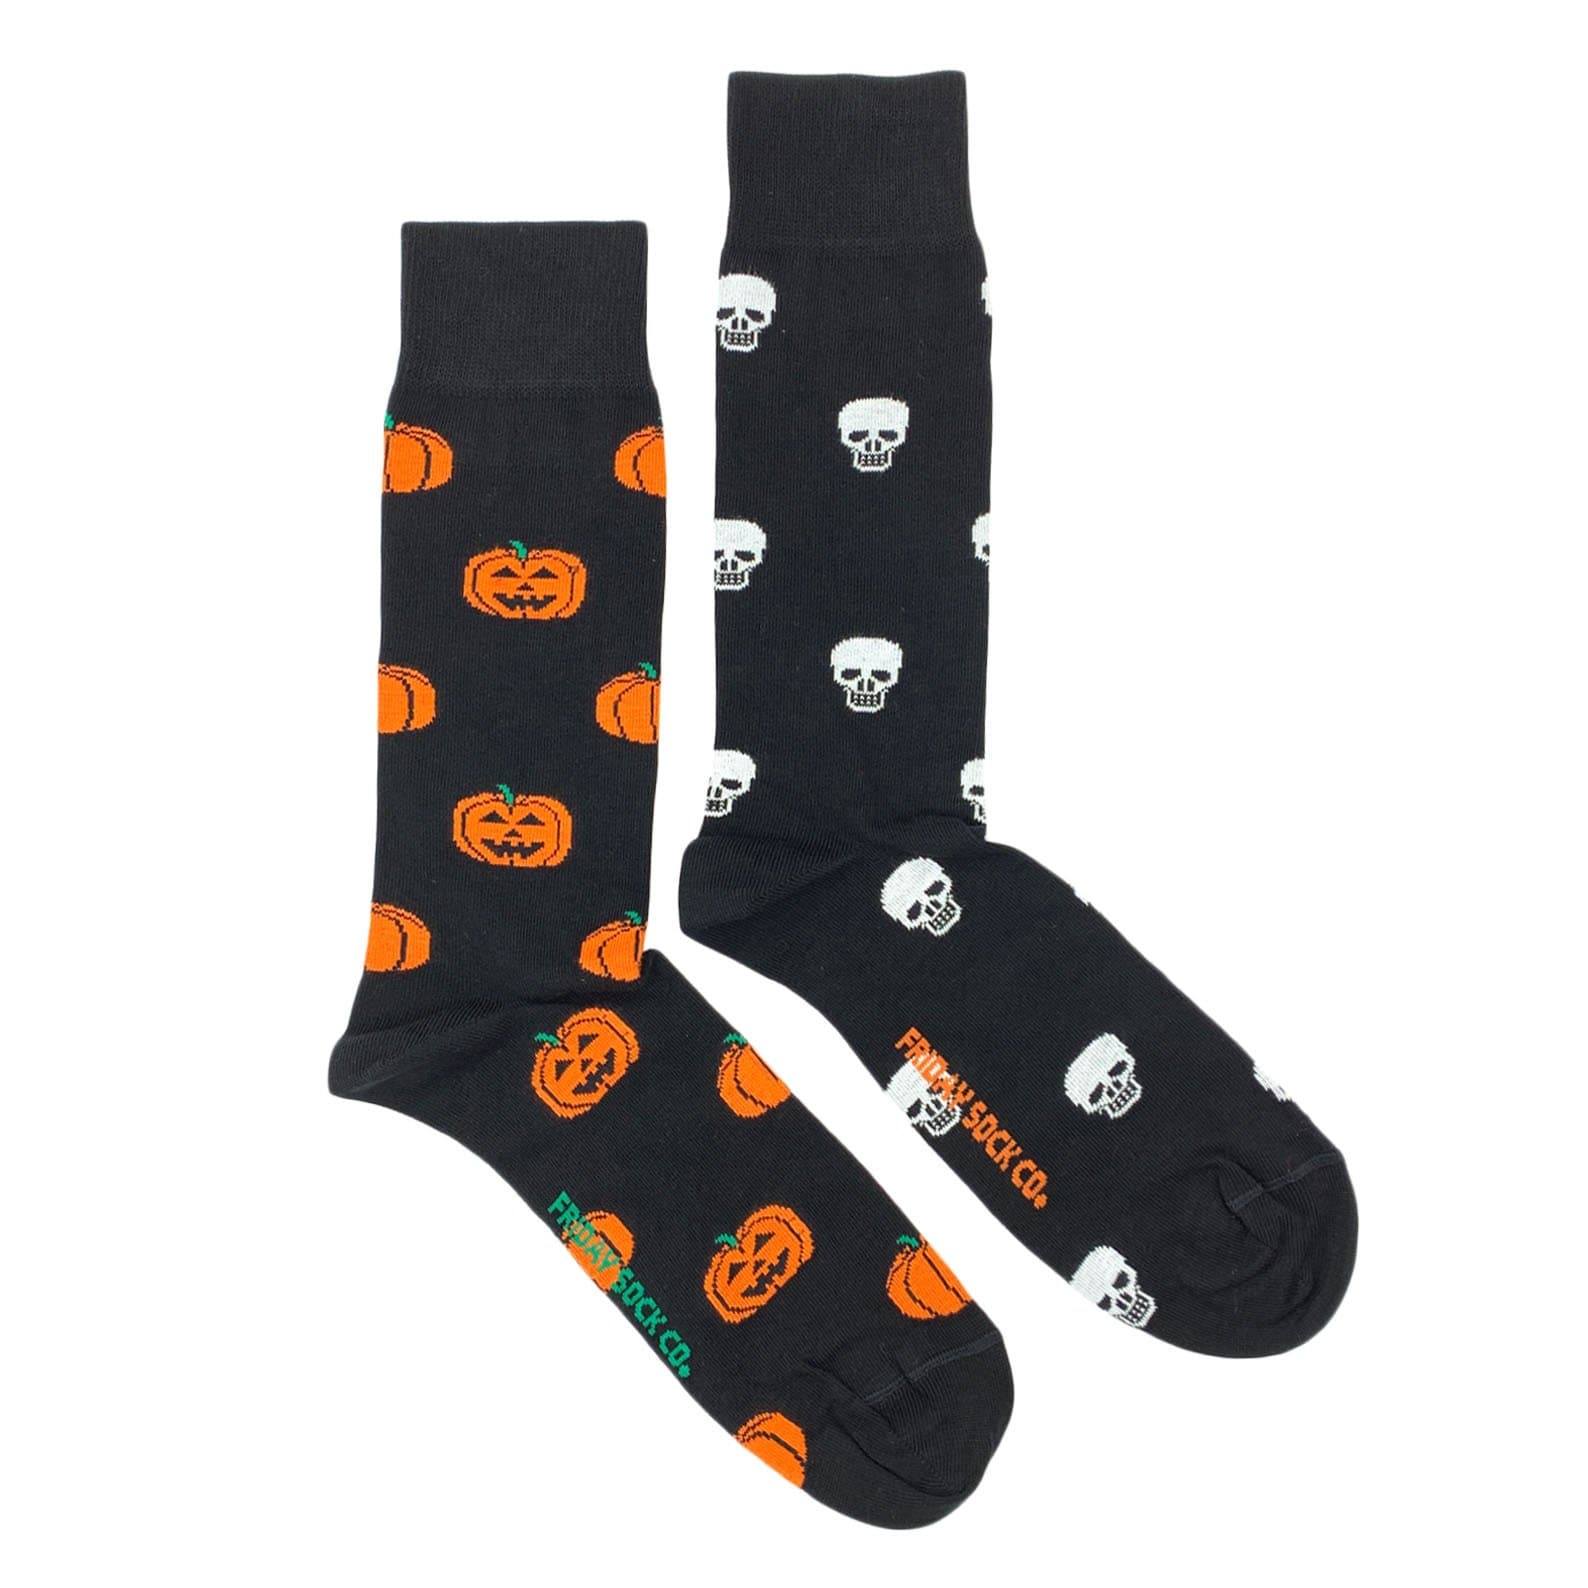 Men's Halloween Socks | Mismatched by Design | Friday Sock Co.